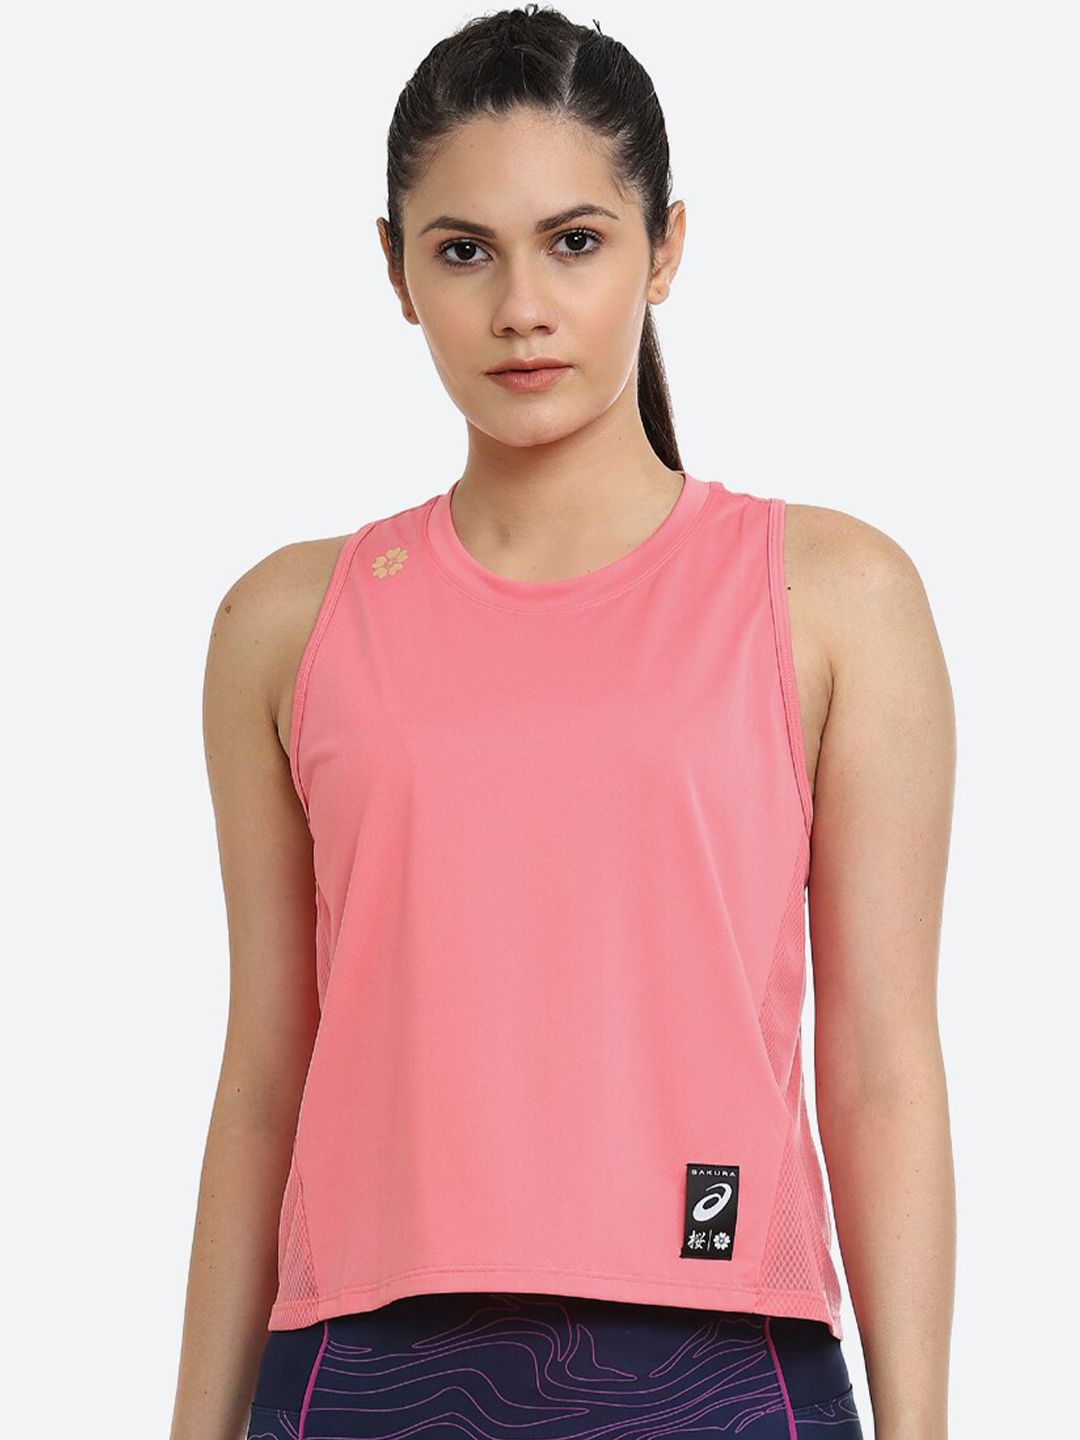 ASICS Sakura Tank  Women Peach-Coloured Typography Colourblocked Extended Sleeves Applique Running T-shirt Price in India